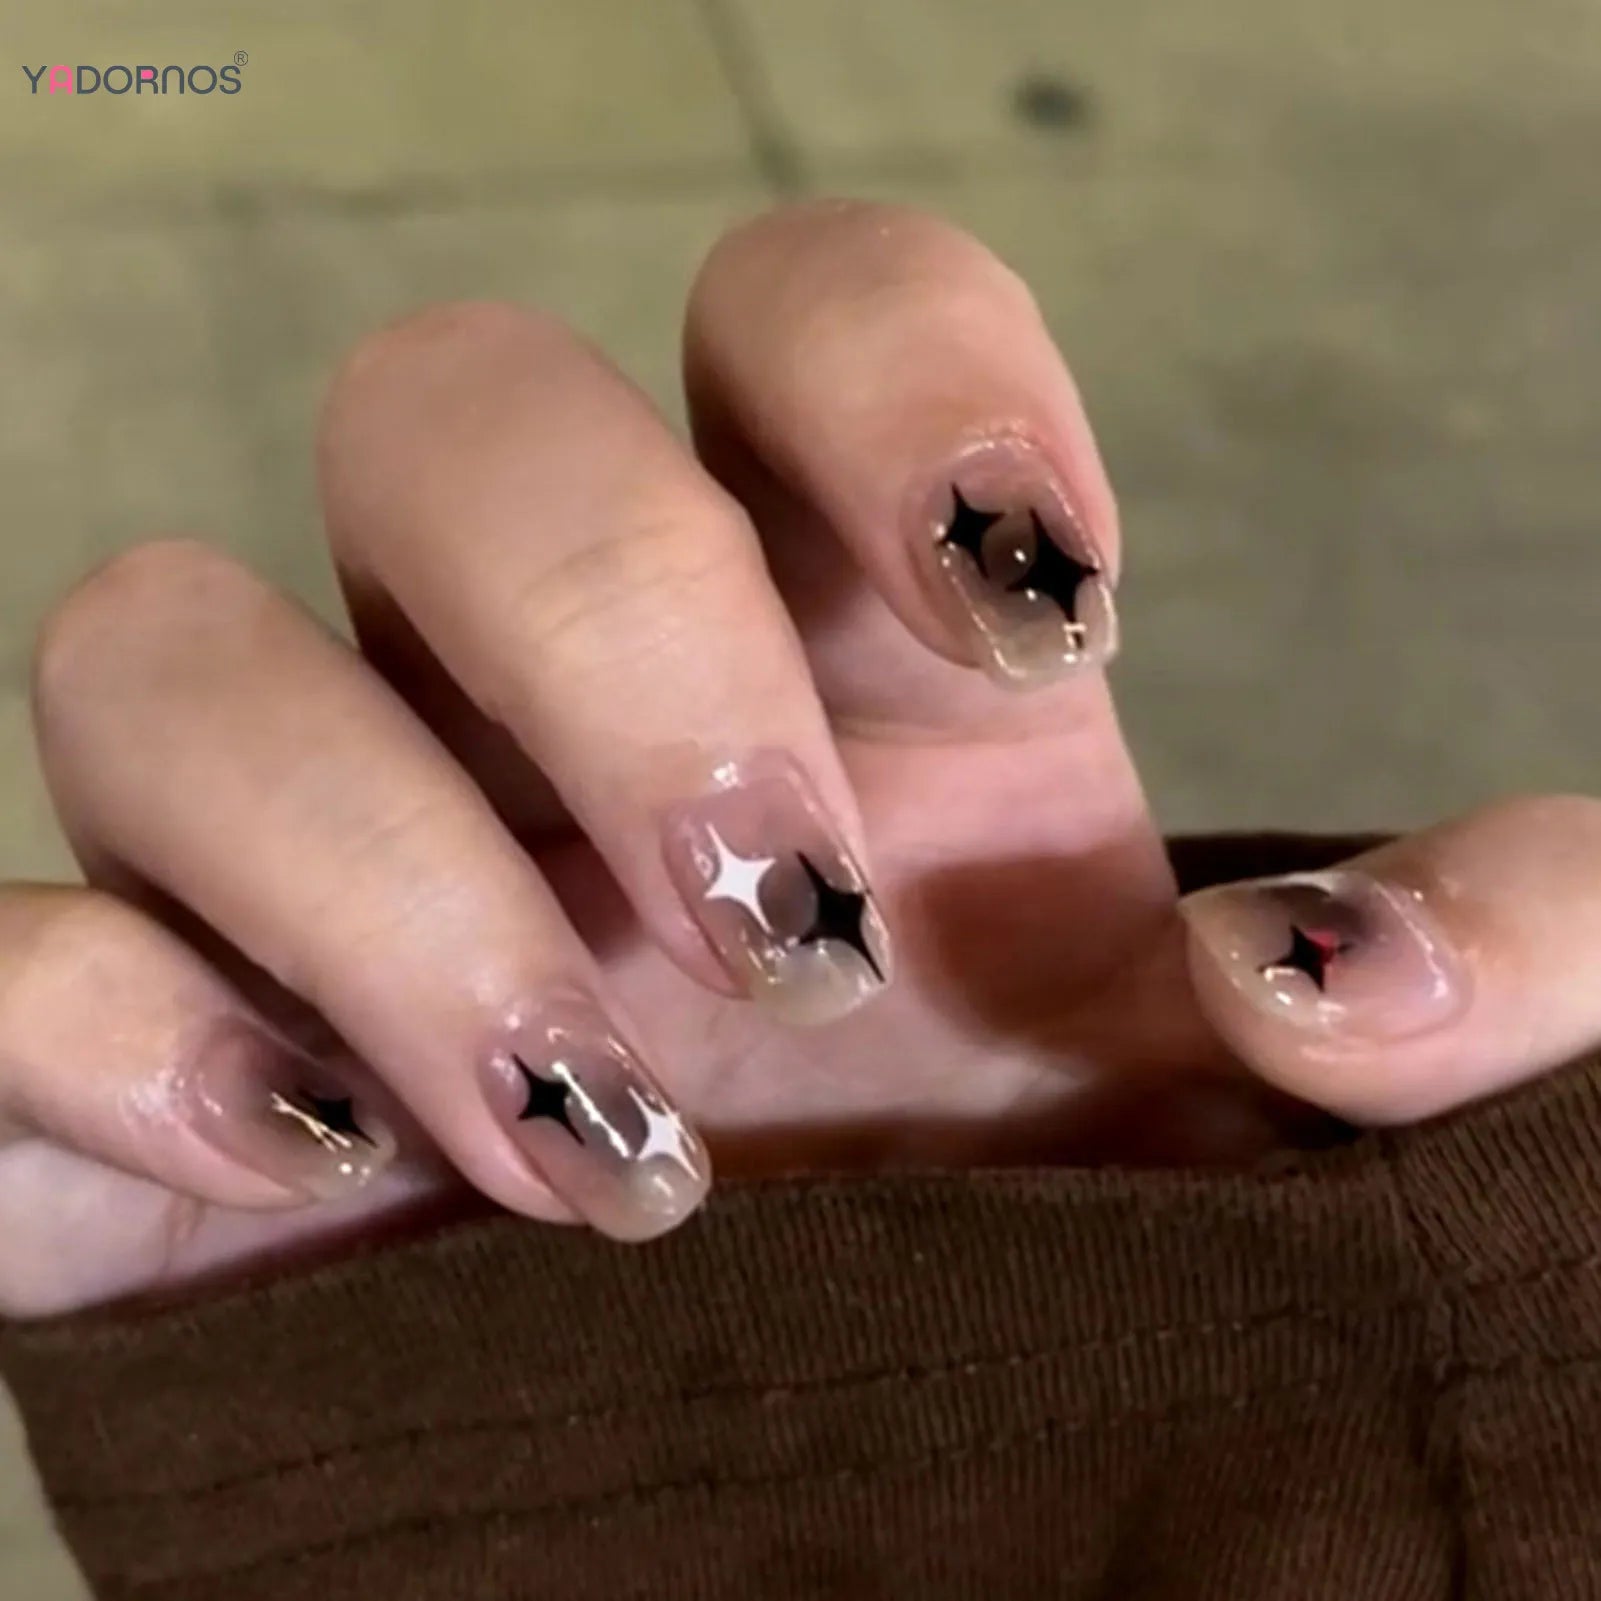 Y2k zwarte witte ster kunstmatige nep nagels volledige omslag korte valse nagel verwijderbare pers op nagels voor vrouwen meisjes diy manicure kunst